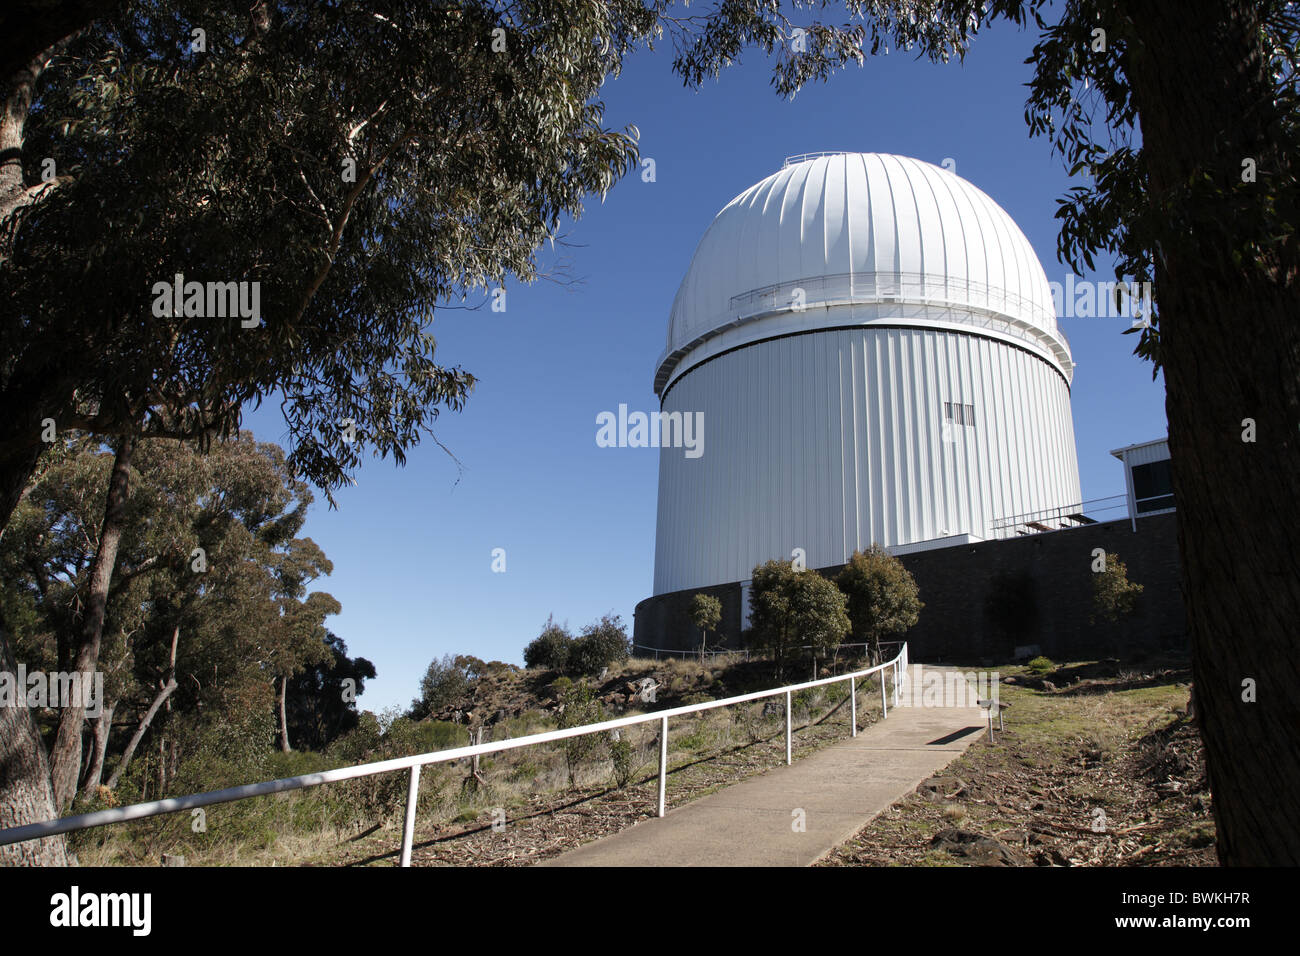 Australien, New South Wales, Coonabarabran, Abstellgleis-Frühling Sternwarte, Astronomie und Astrophysik Teleskop Kuppel Stockfoto